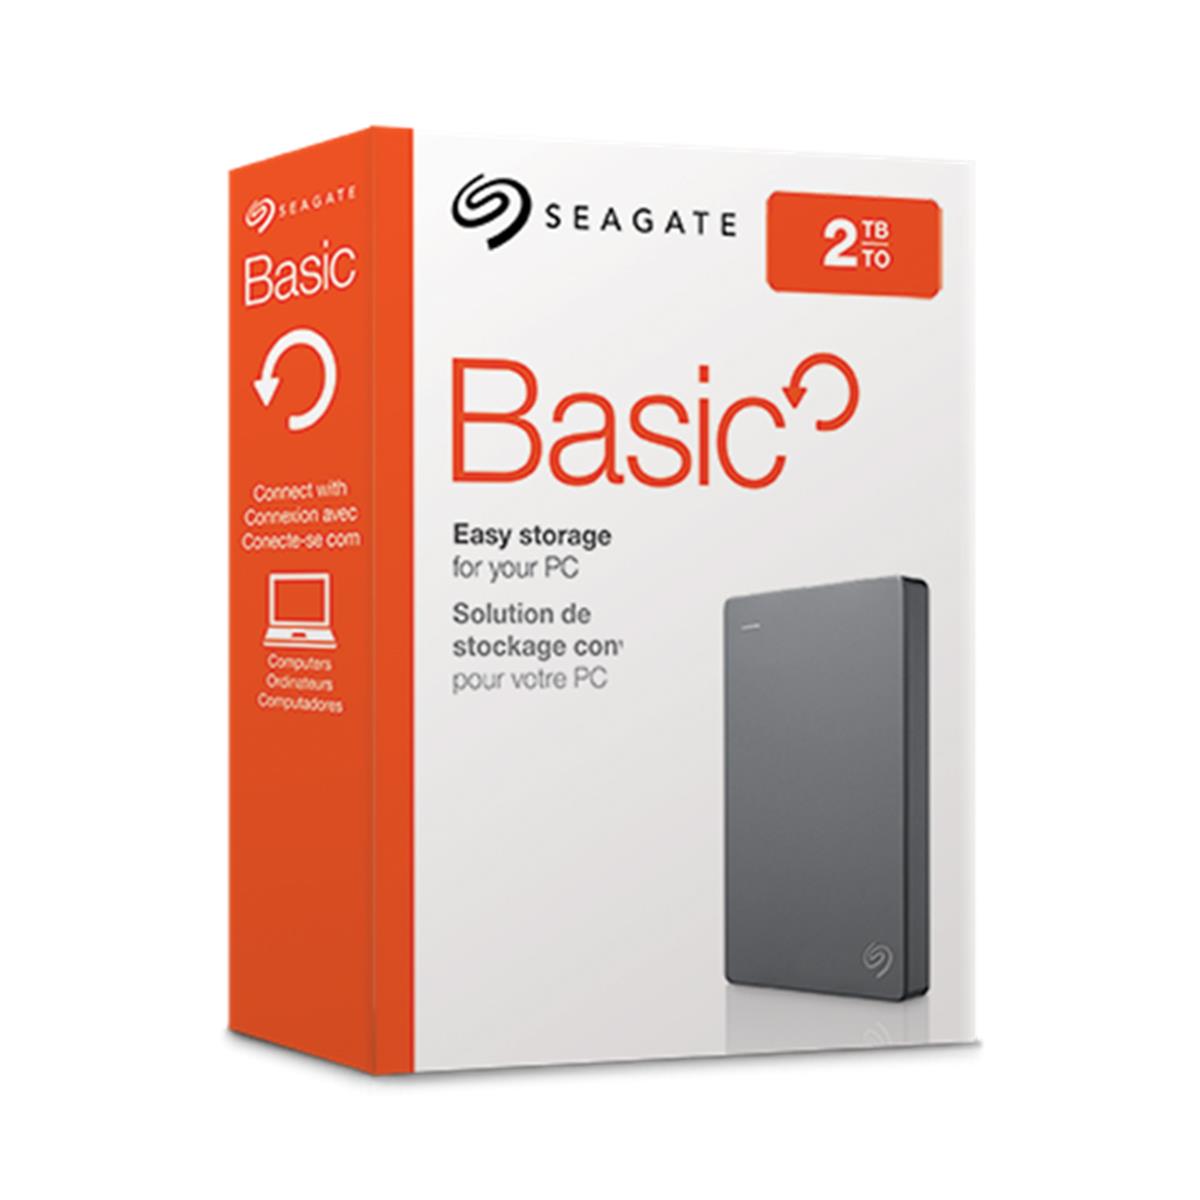 HD Externo Seagate Basic, 2TB, USB 3.0, Black